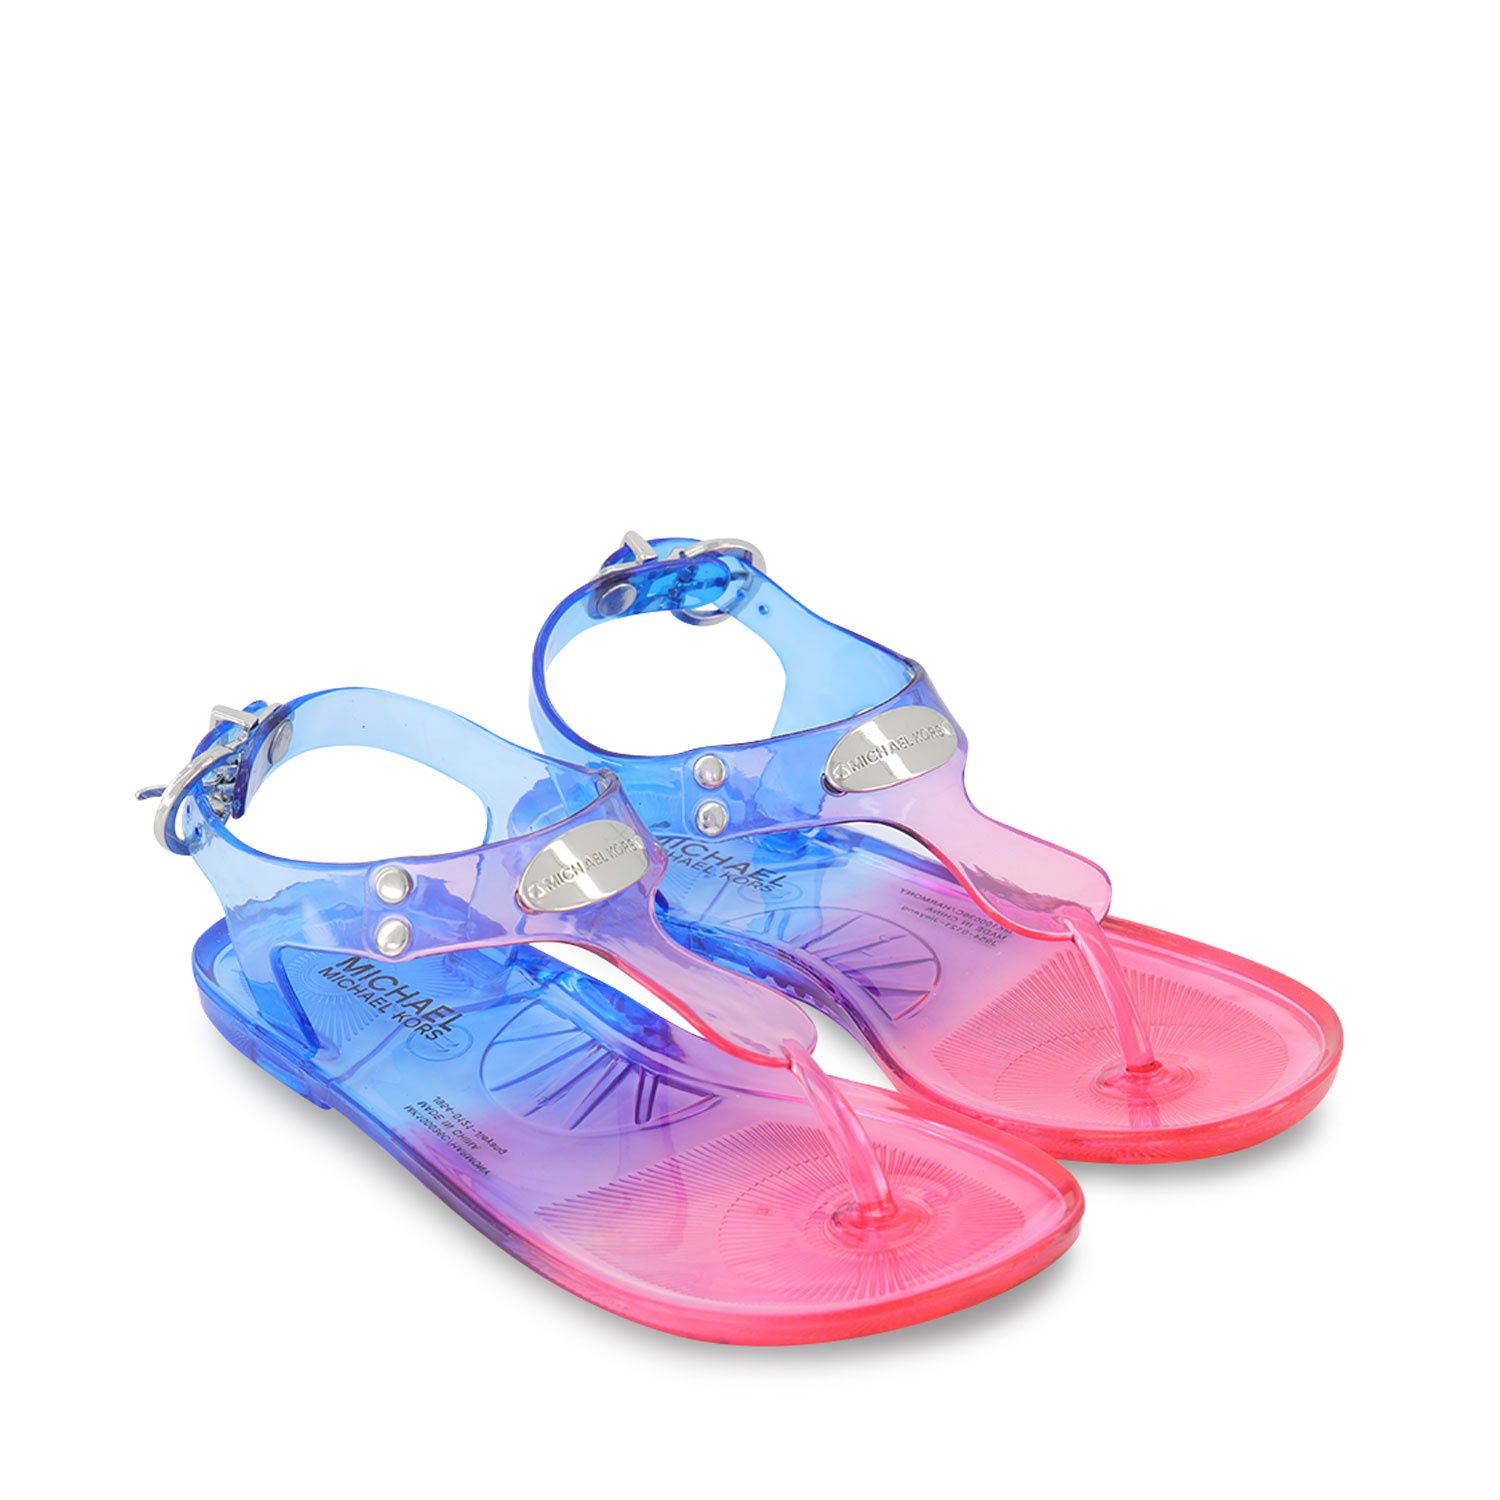 michael kors children's sandals